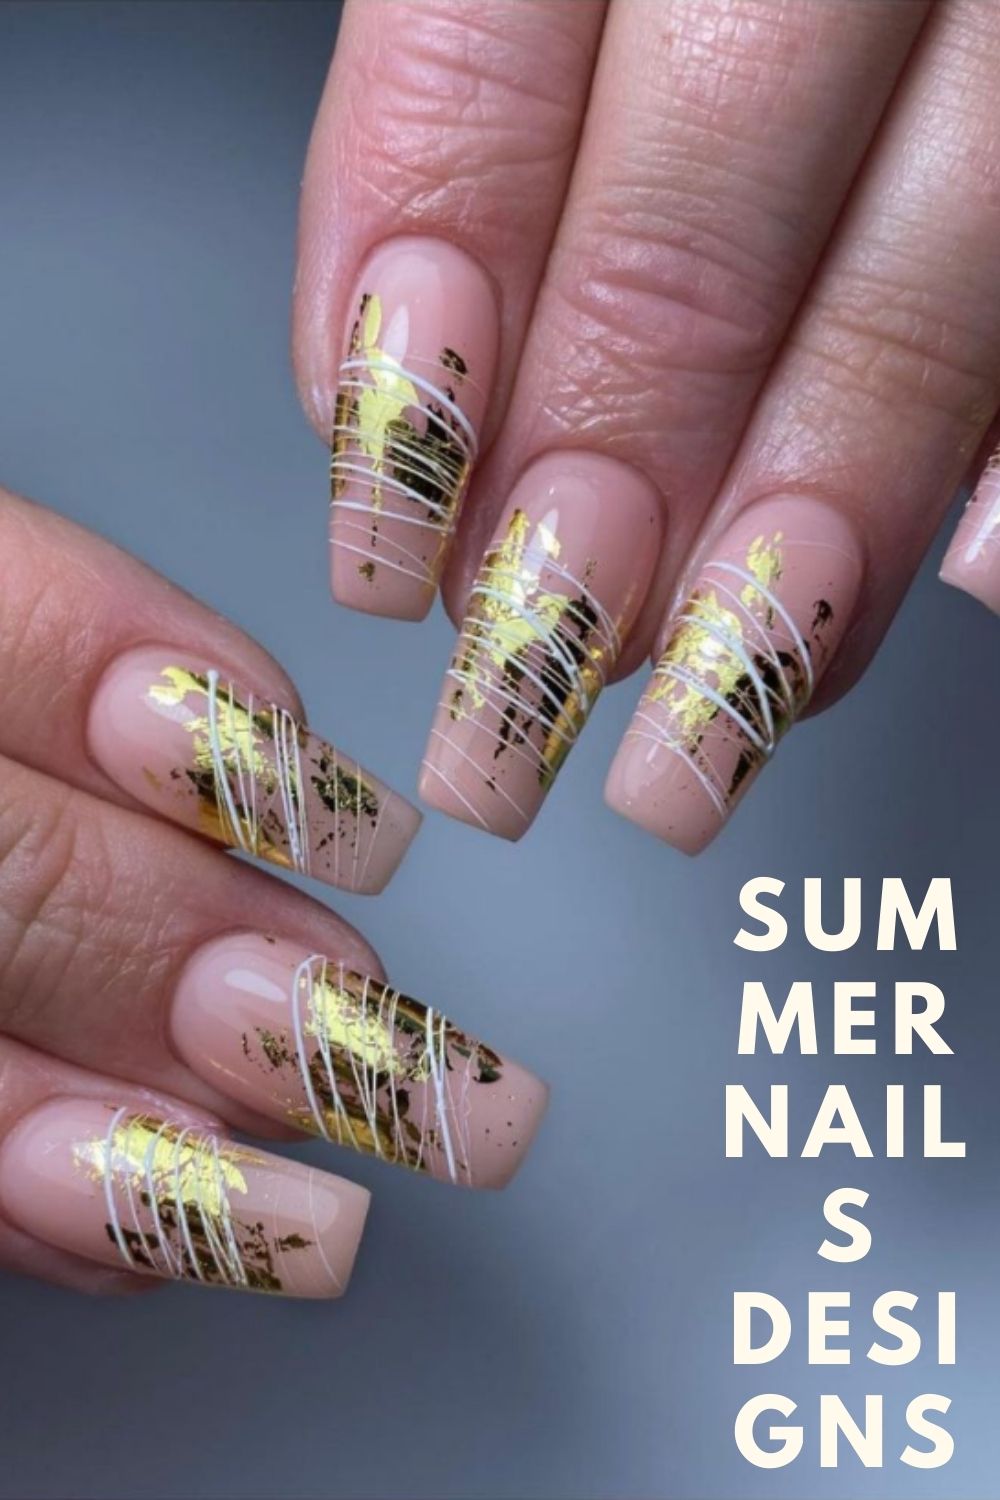 Fun summer nail art design